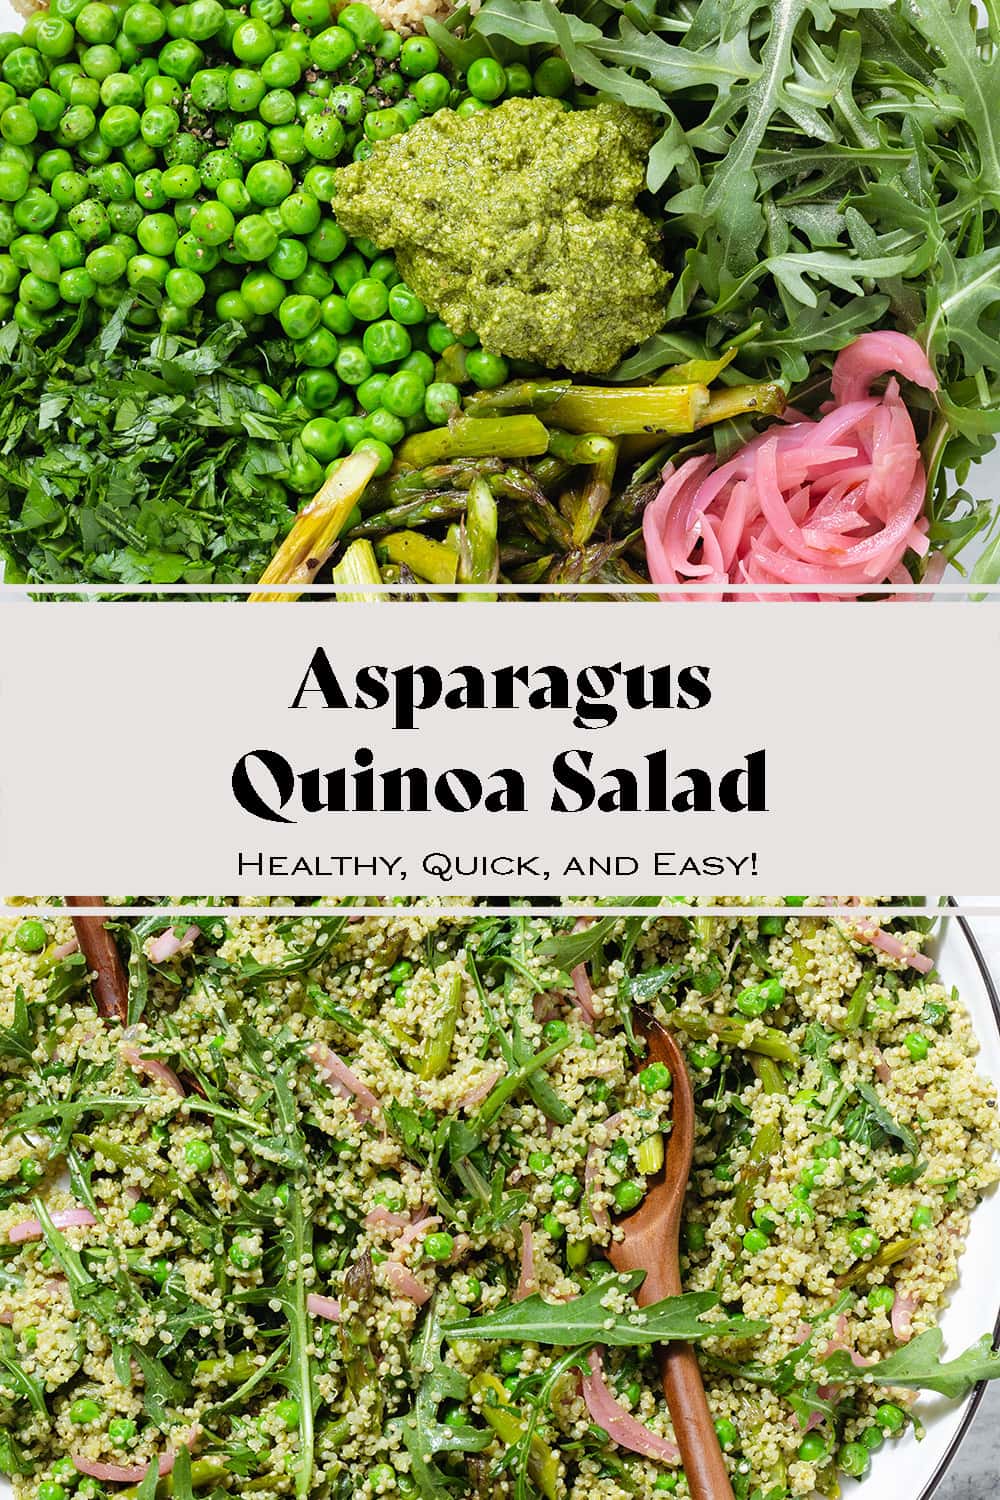 Asparagus Quinoa Salad with Pesto